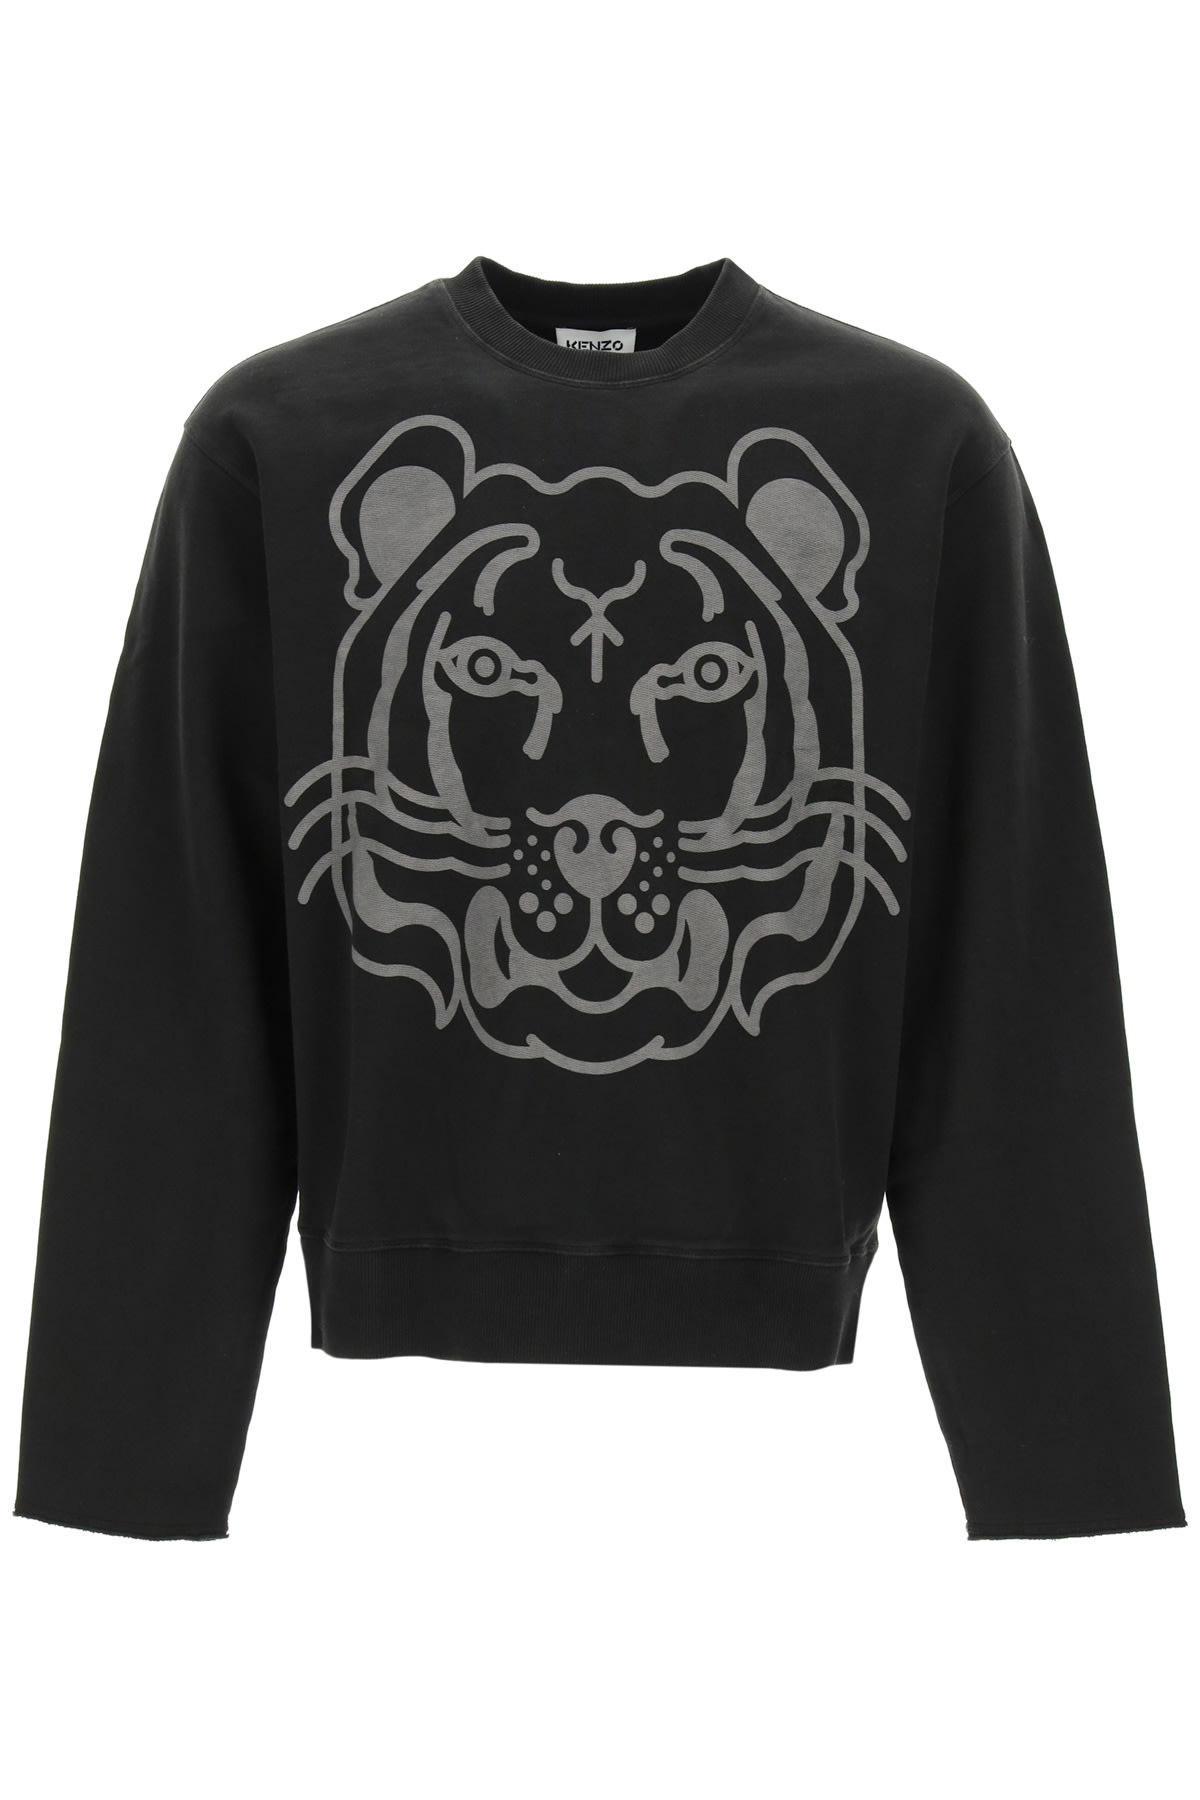 Kenzo K-tiger Print Crewneck Sweatshirt